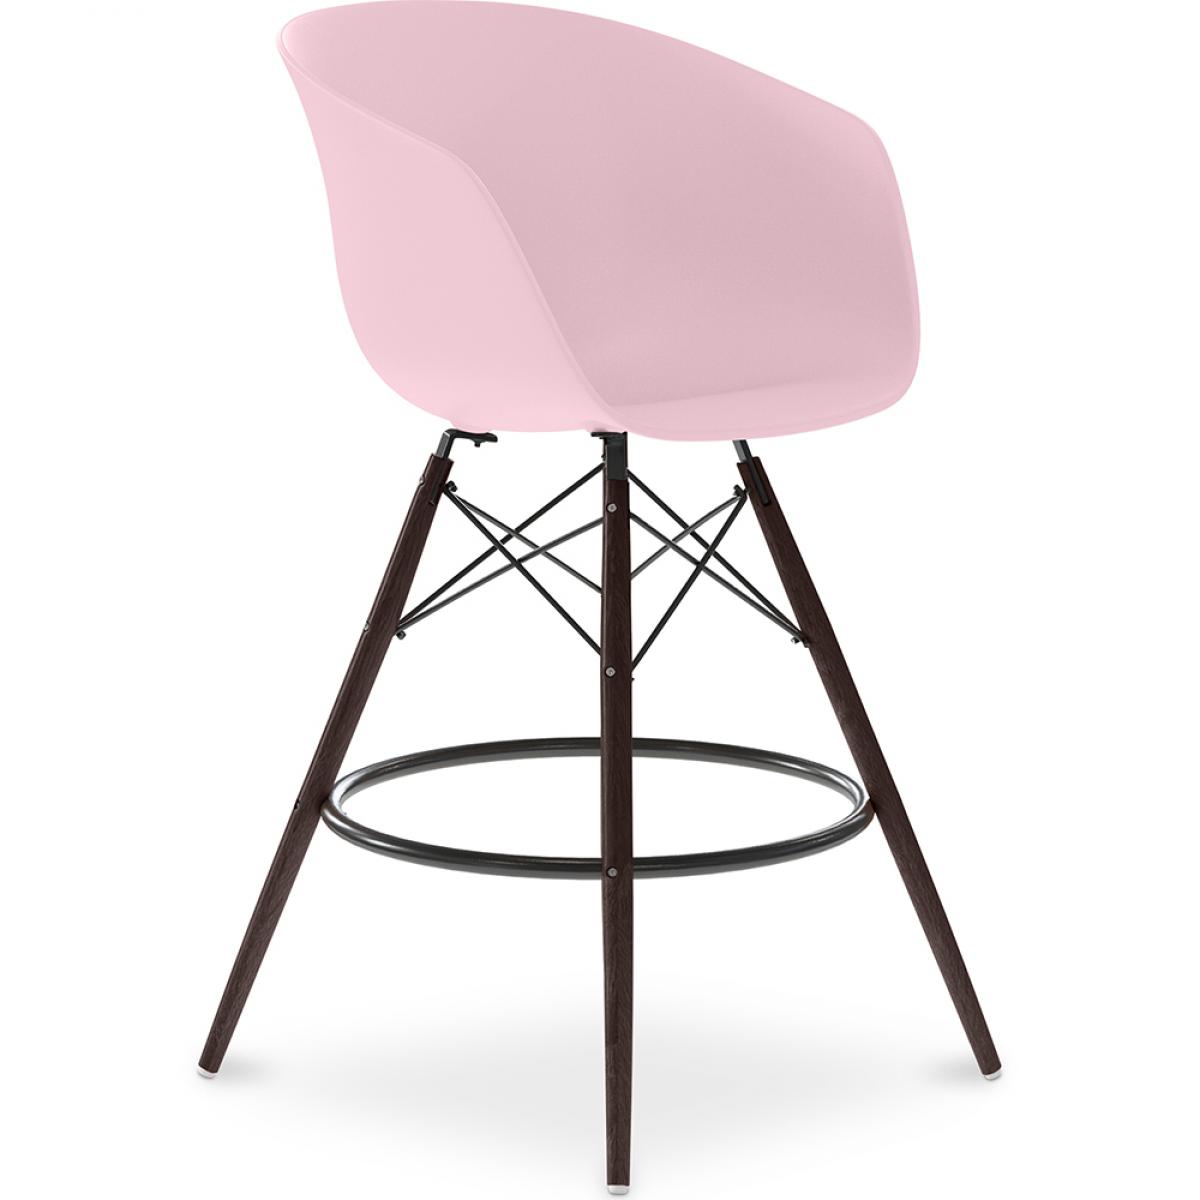 iconik interior chaise de bar design scandinave en polypropylene et pieds en bois sombre - pirela rose pâle  rose